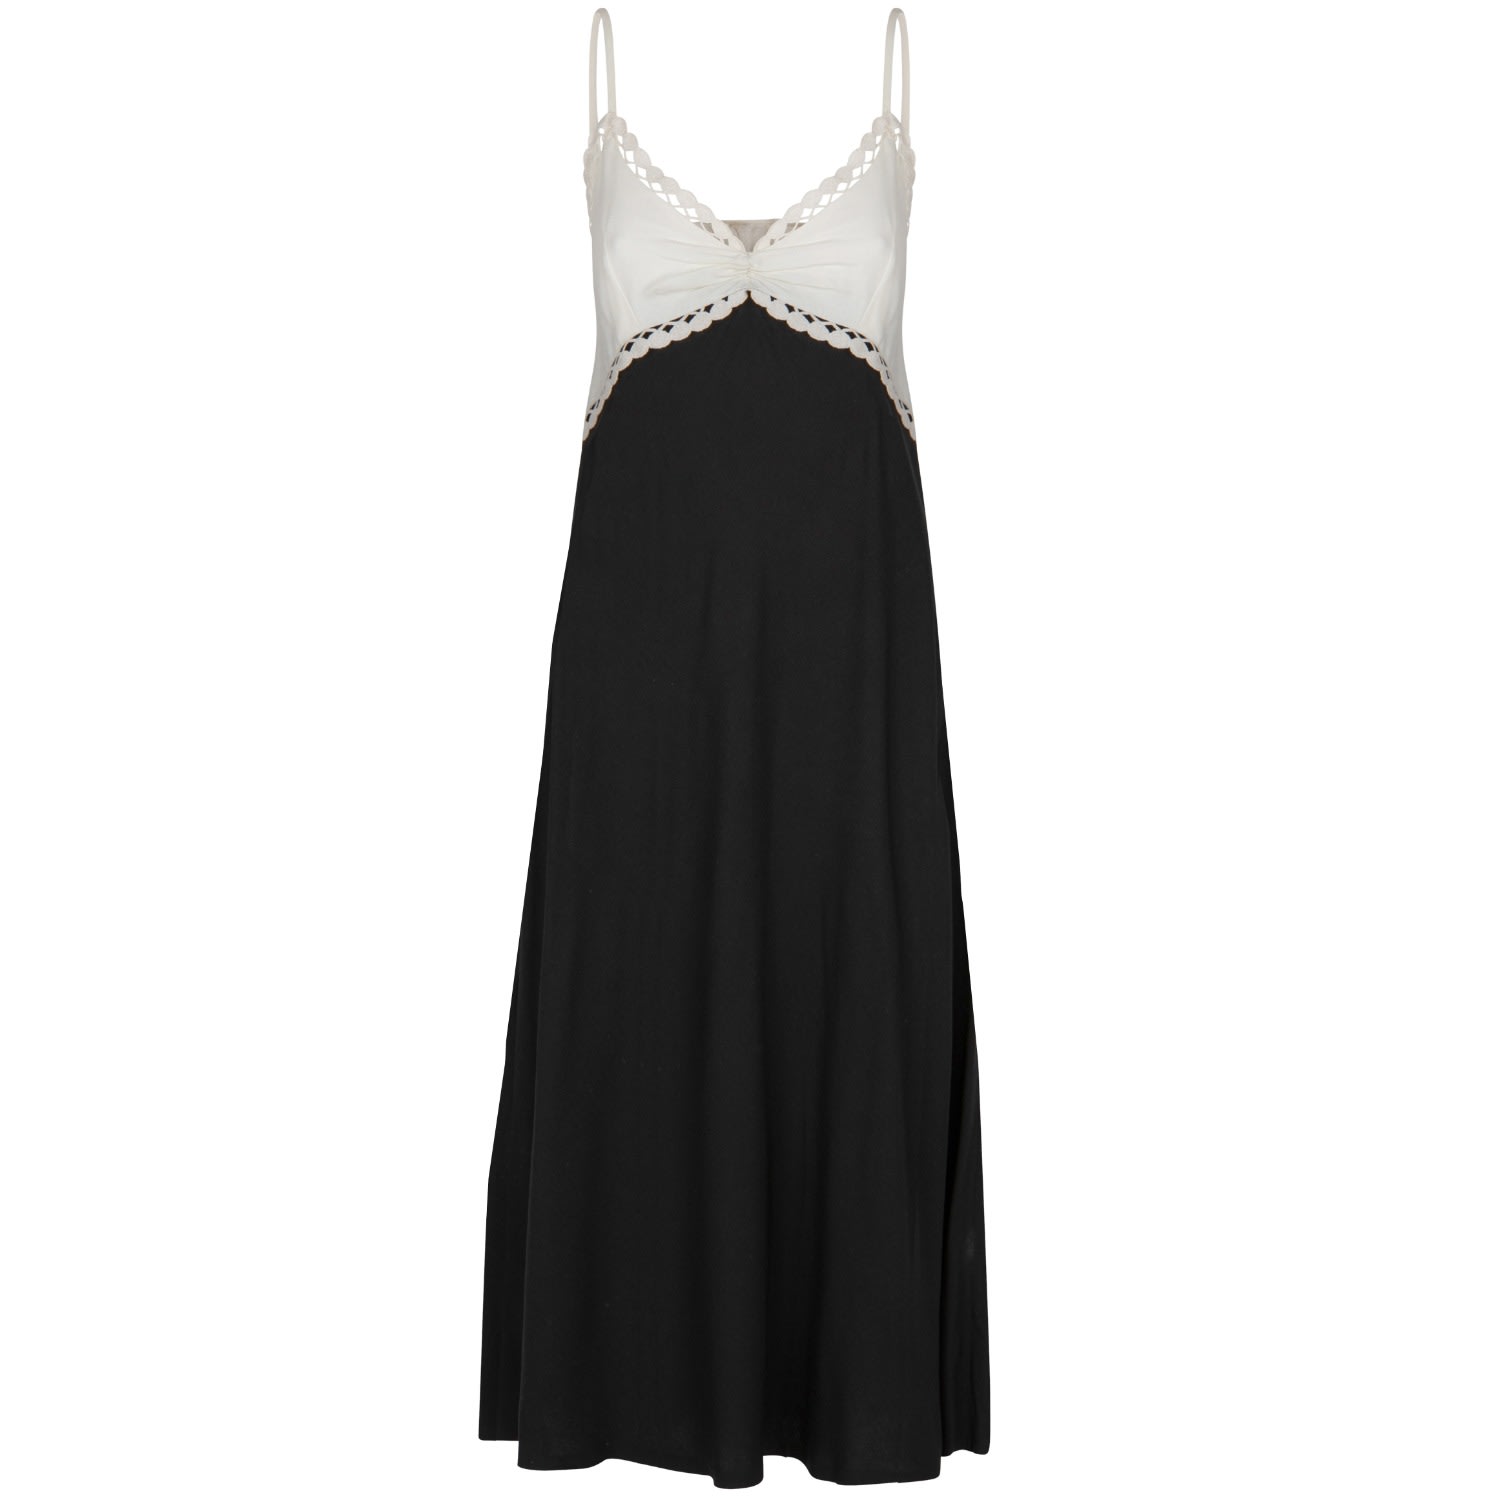 Women’s Embroidered Lace Slip Dress - Black & White Xs/S Langner